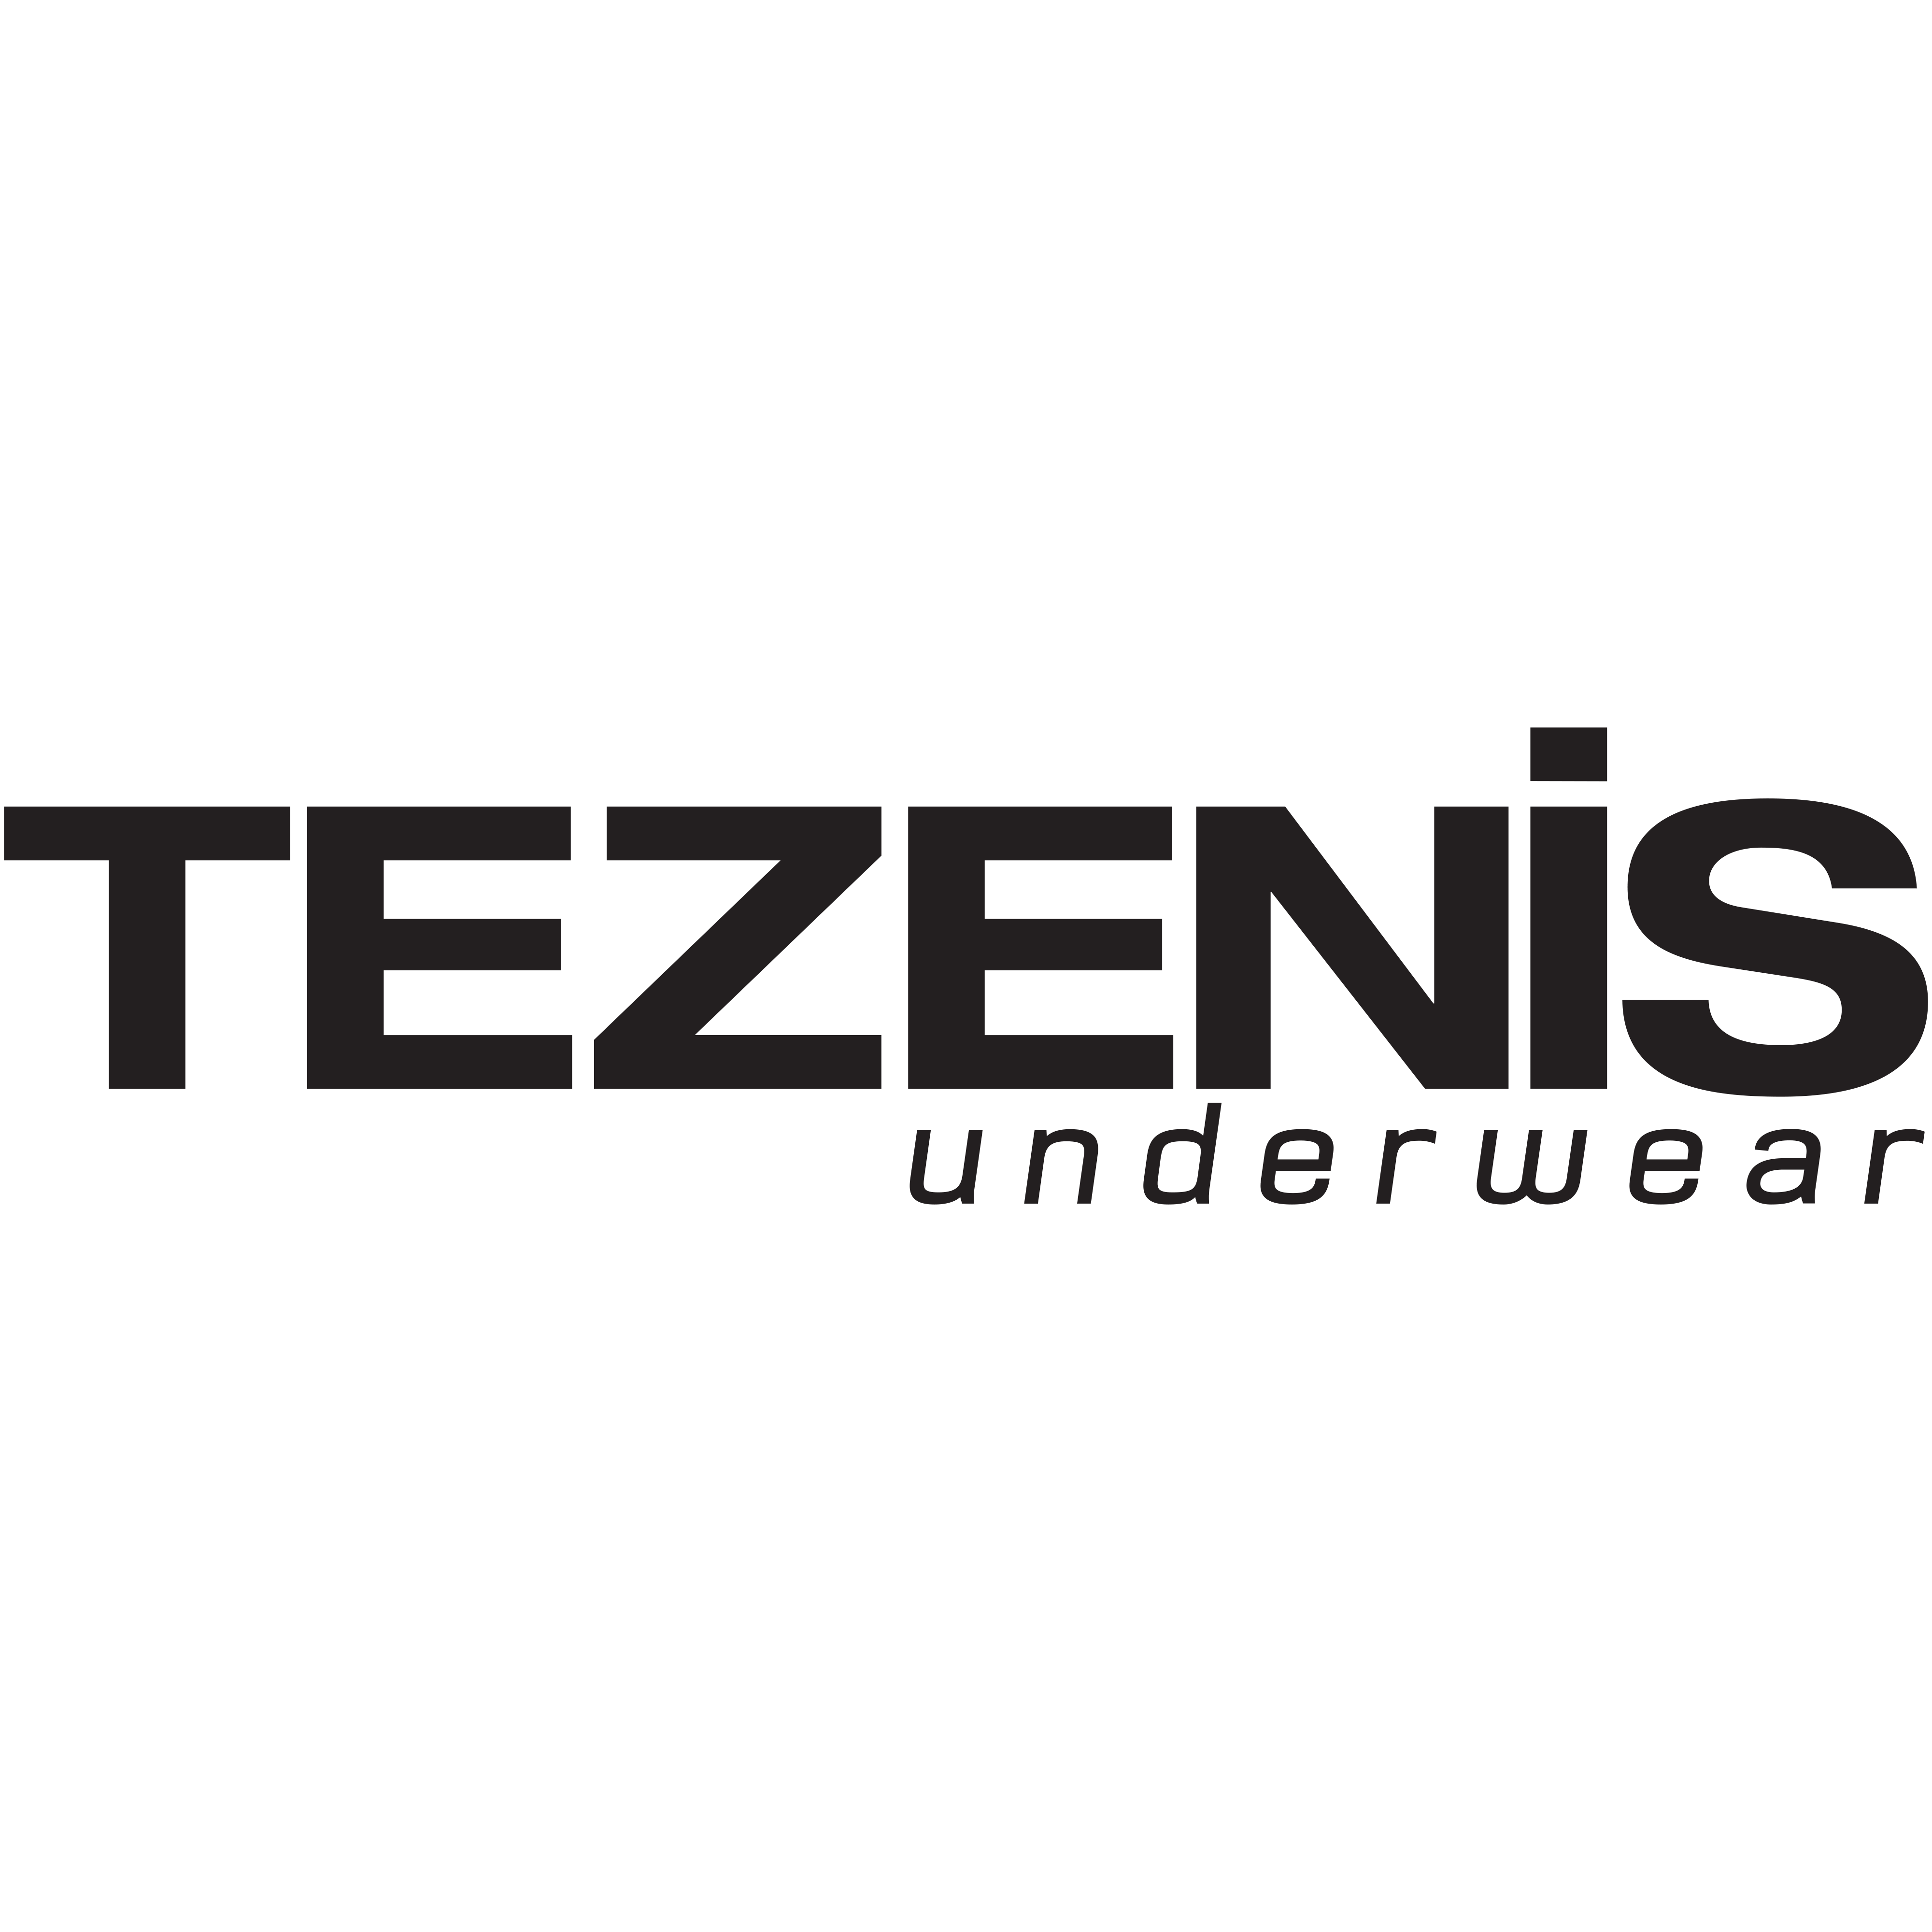 Tezenis Logo